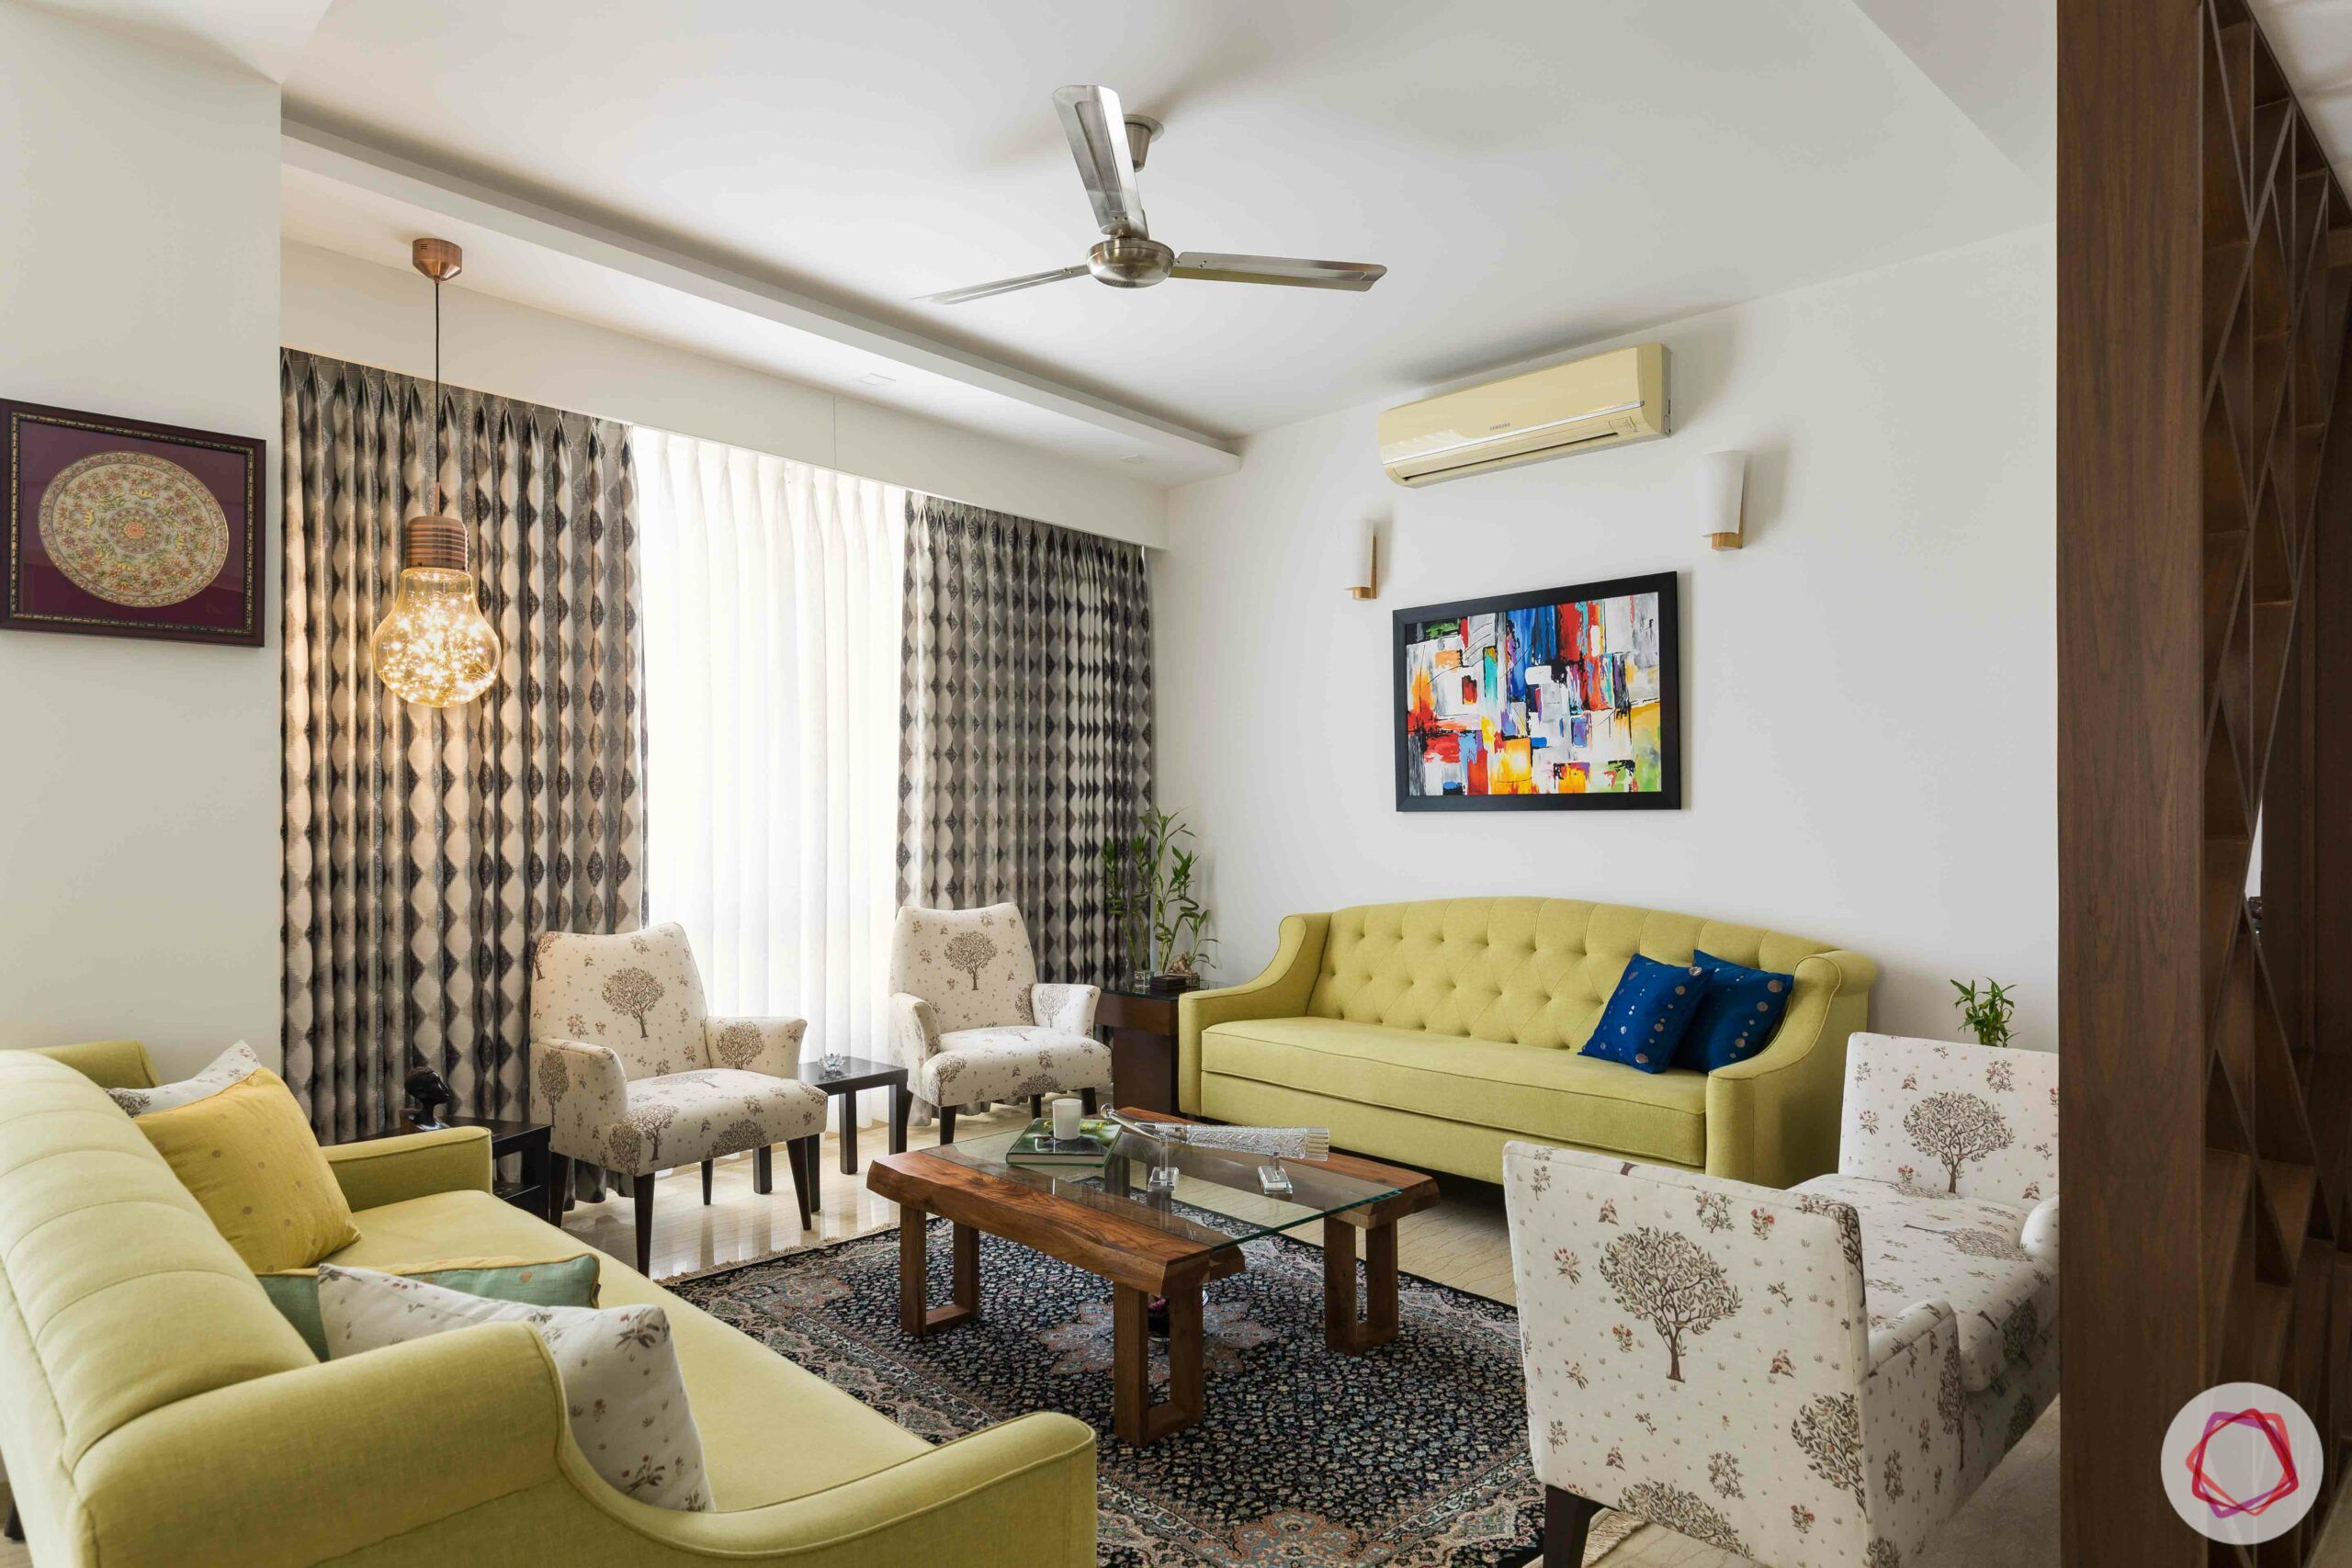 livspace gurgaon-yellow sofa designs-white armchair designs